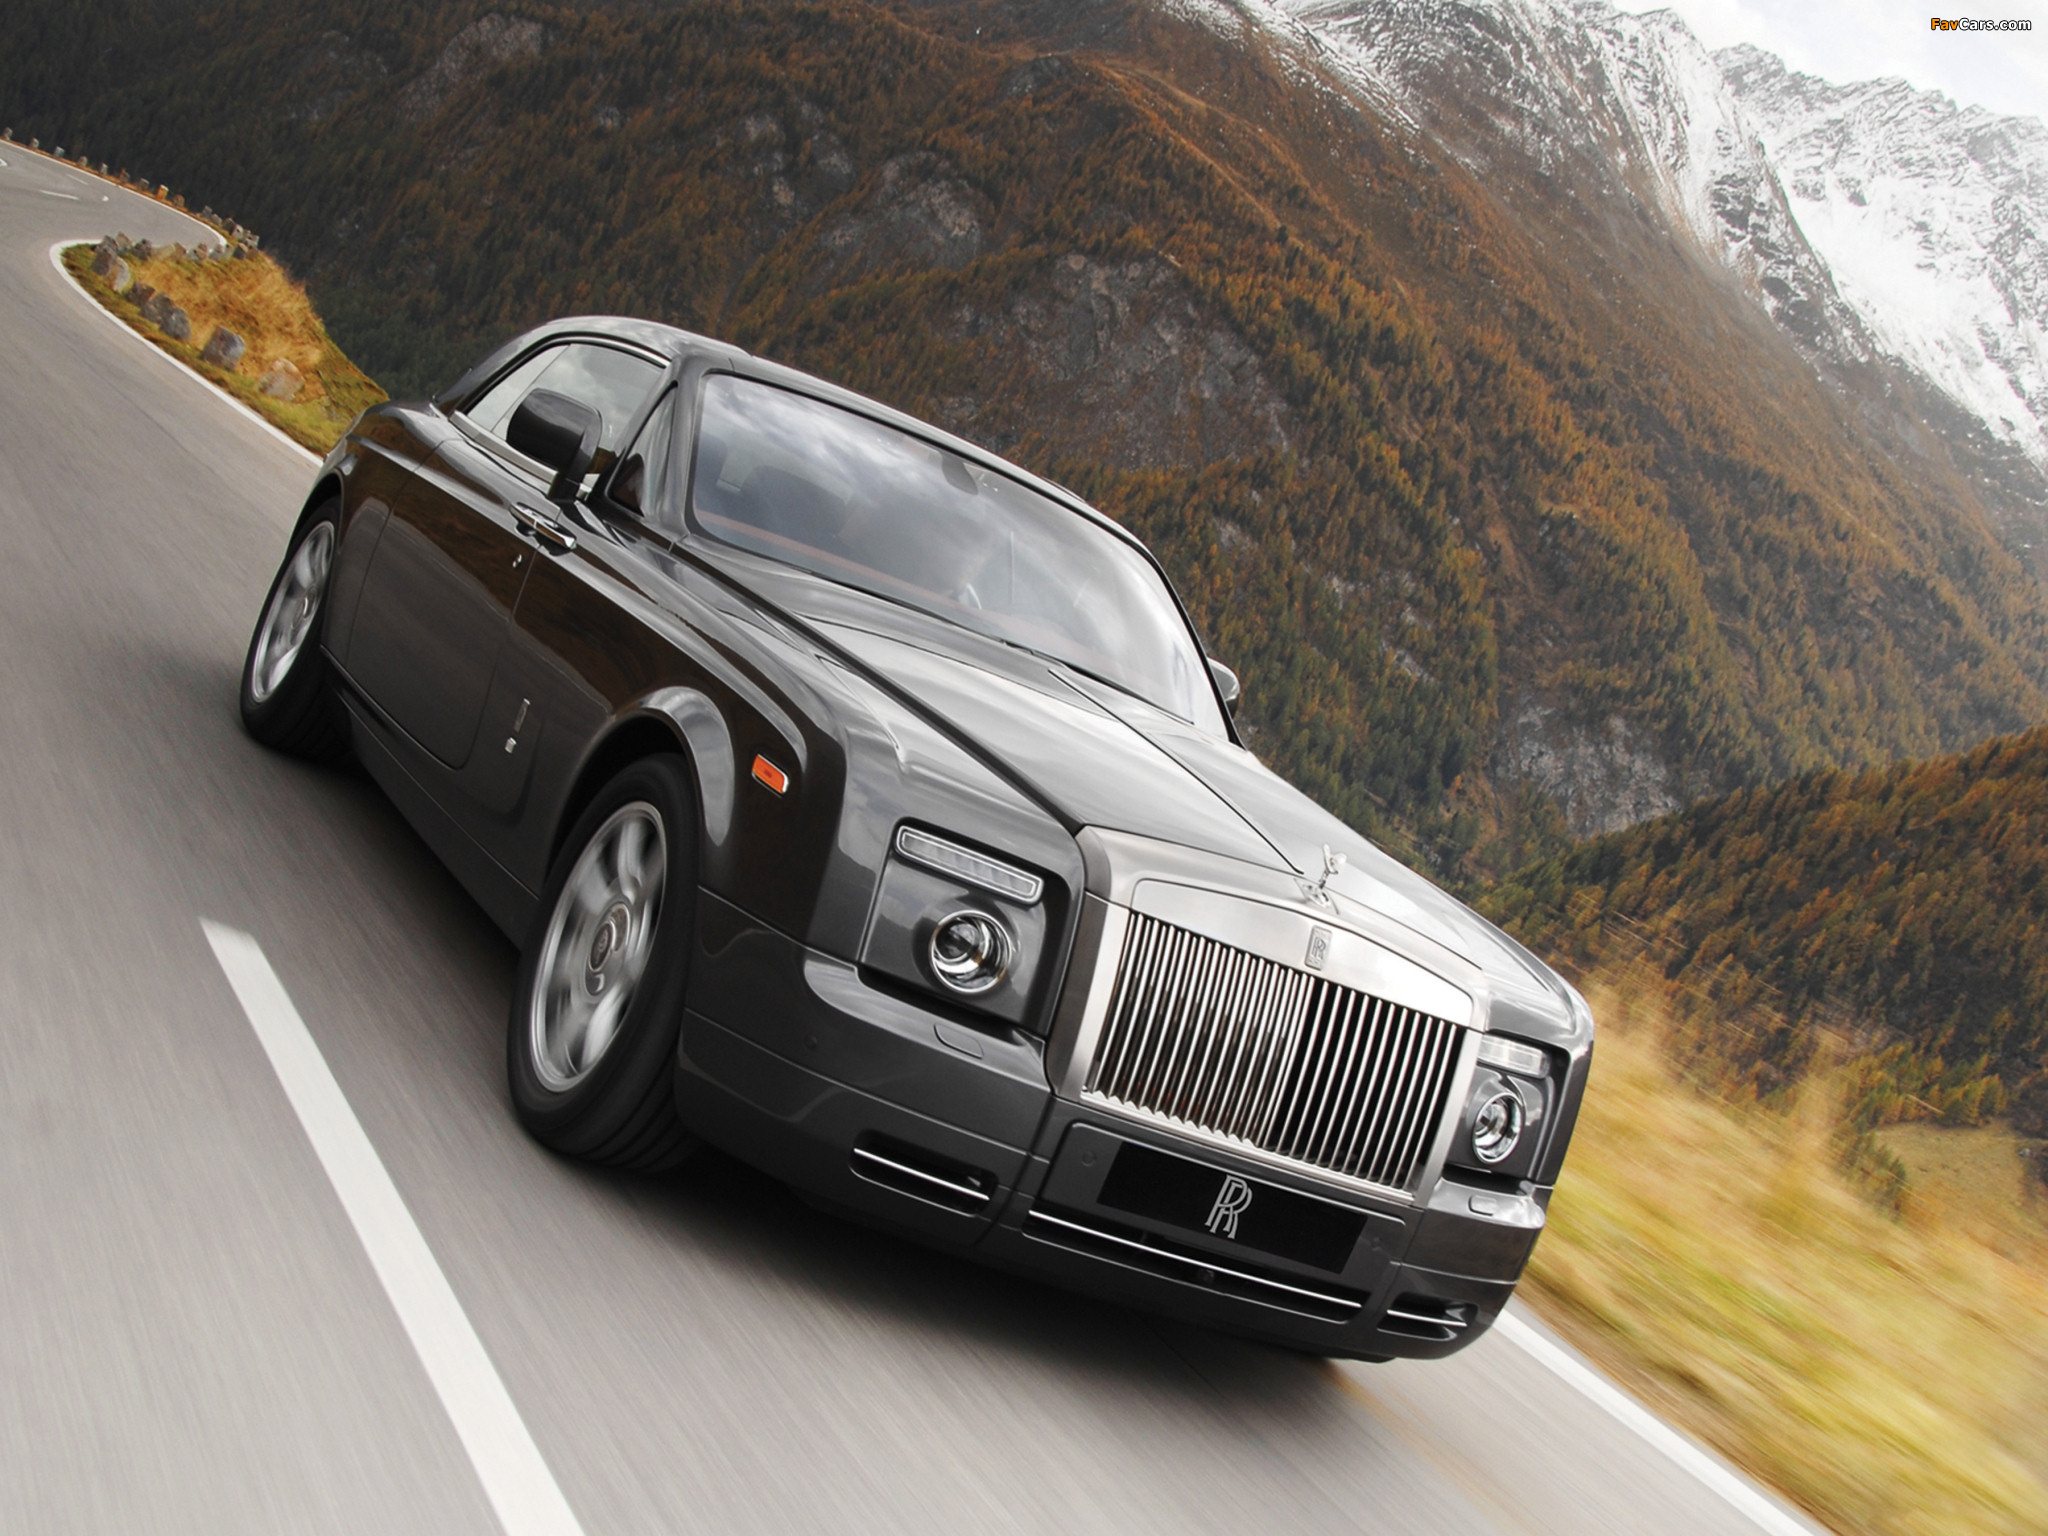 Rolls com. Rolls Royce Phantom Coupe. Rolls Royce Phantom Coupe 2009. Rolls Royce Phantom купе. Rolls Royce Phantom Coupe 2008.